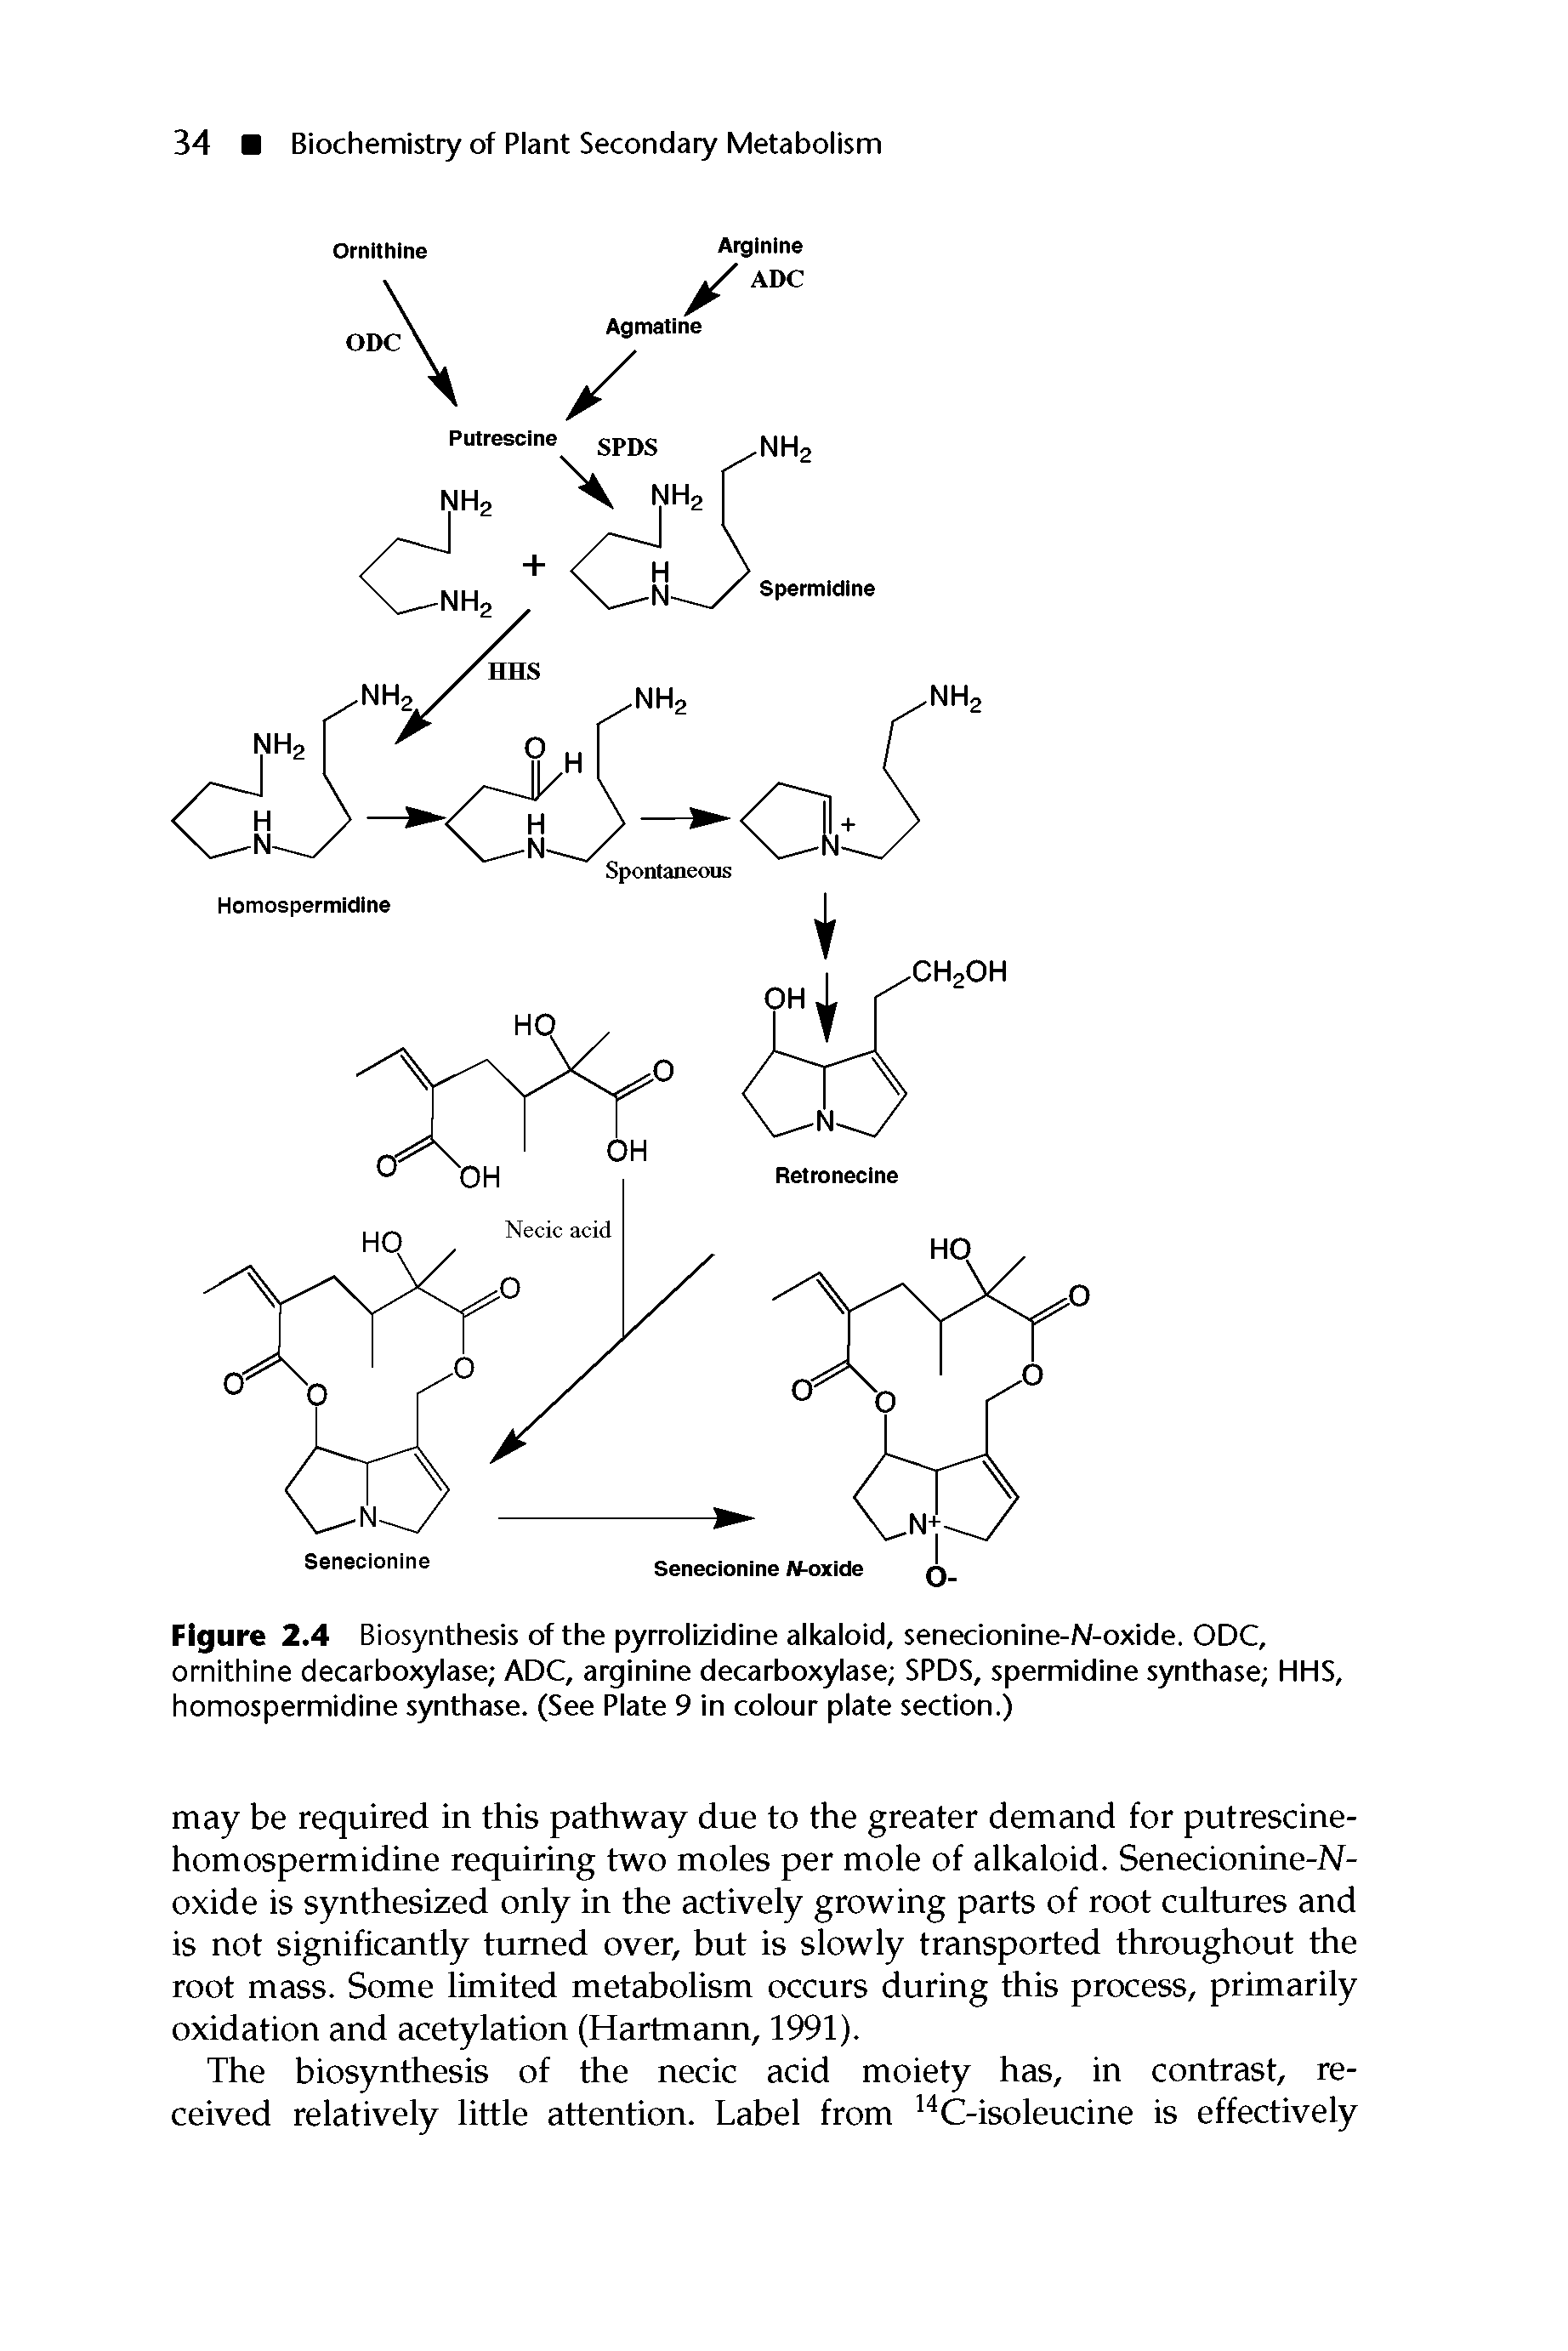 Figure 2.4 Biosynthesis of the pyrrolizidine alkaloid. senecionine-N-oxide. ODC, ornithine decarboxylase ADC, arginine decarboxylase SPDS, spermidine synthase HHS, homospermidine synthase. (See Plate 9 in colour plate section.)...